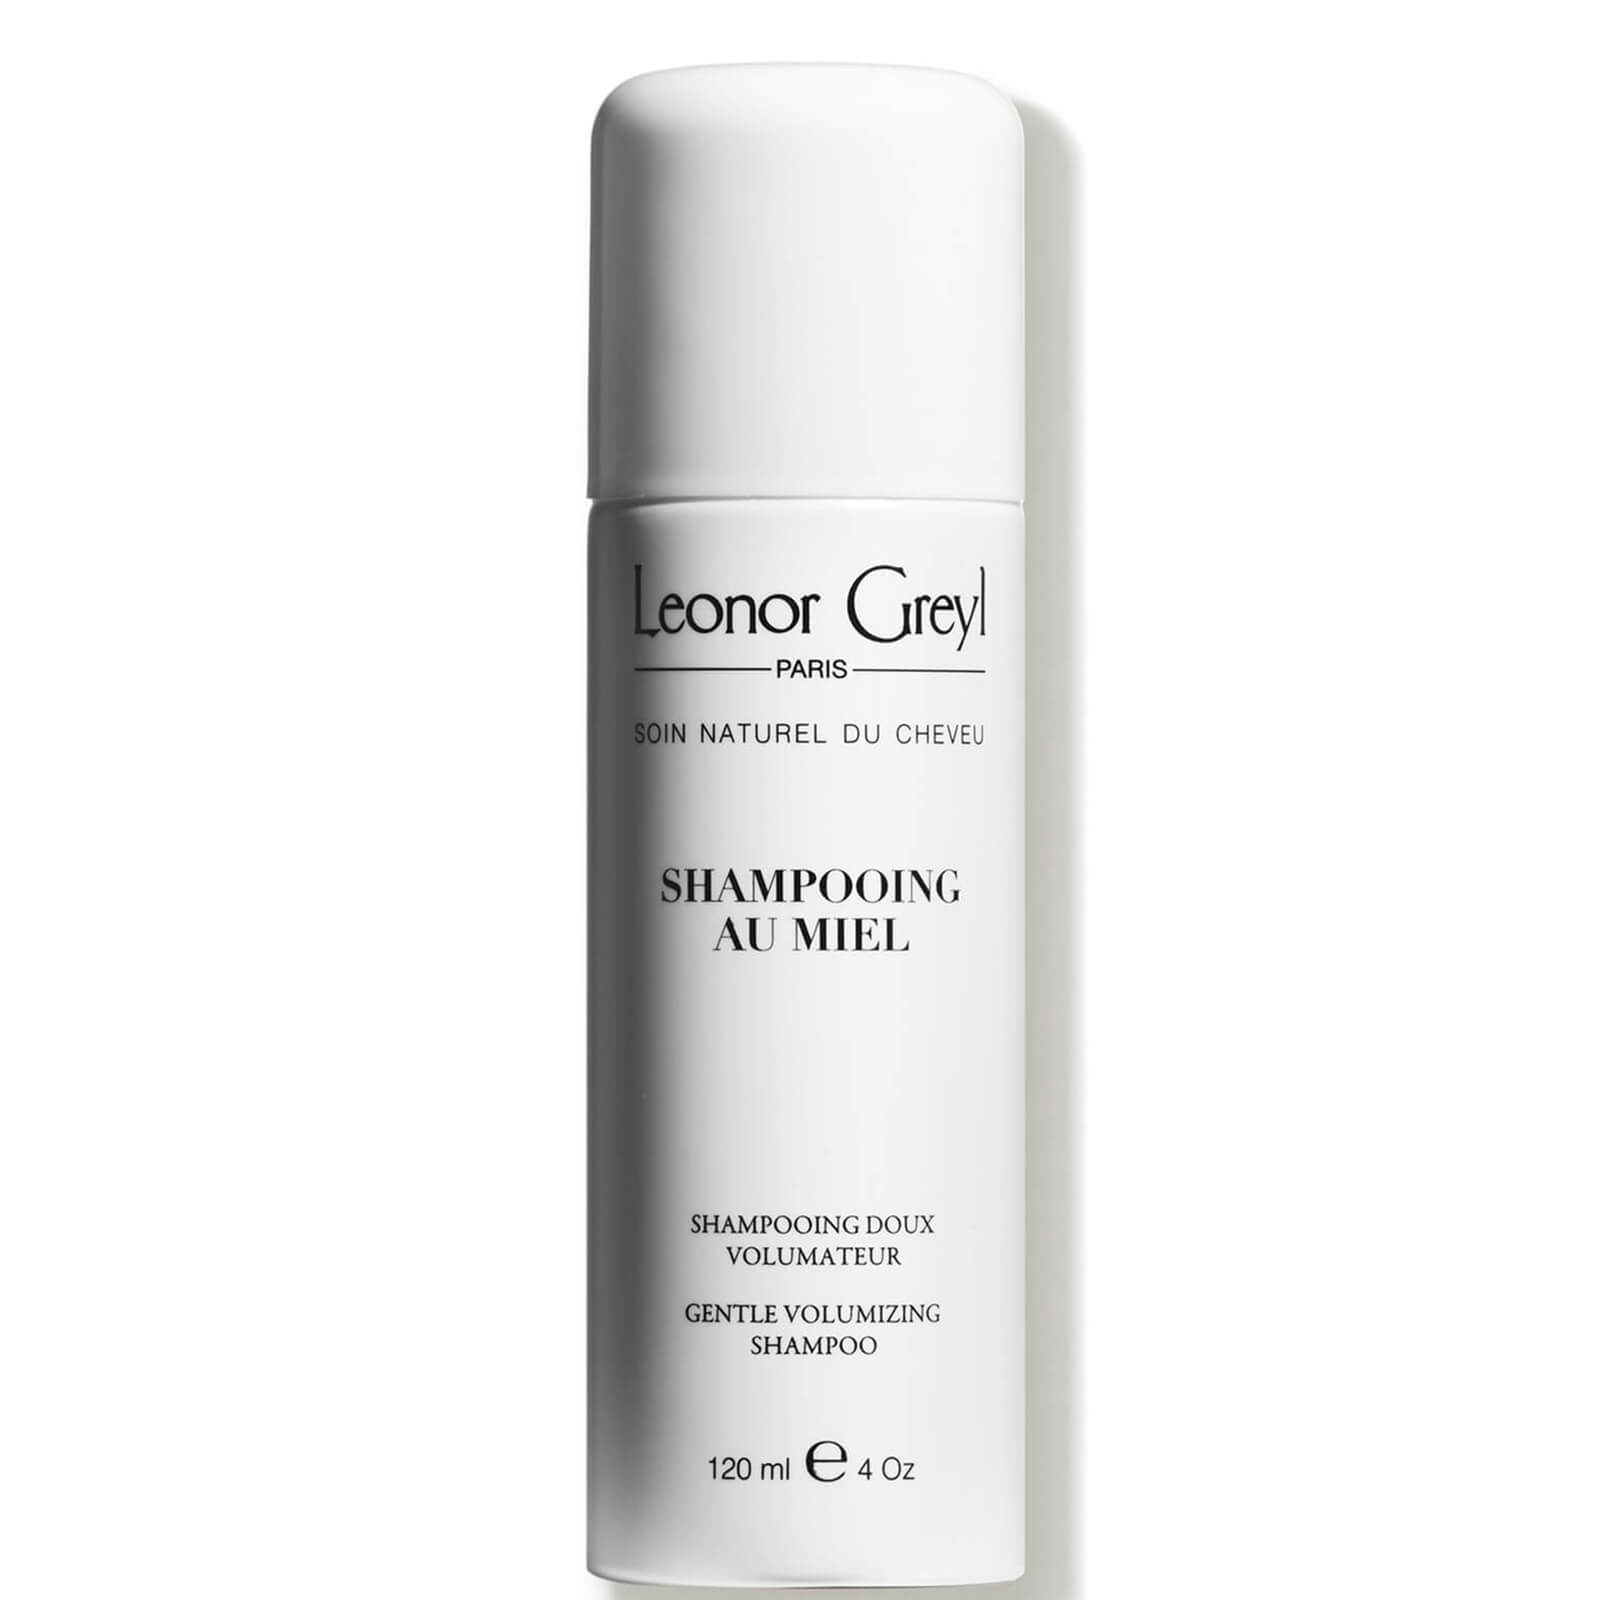 Leonor Greyl Shampooing Au Miel (Gentle Shampoo for Natural Volume and Shine)